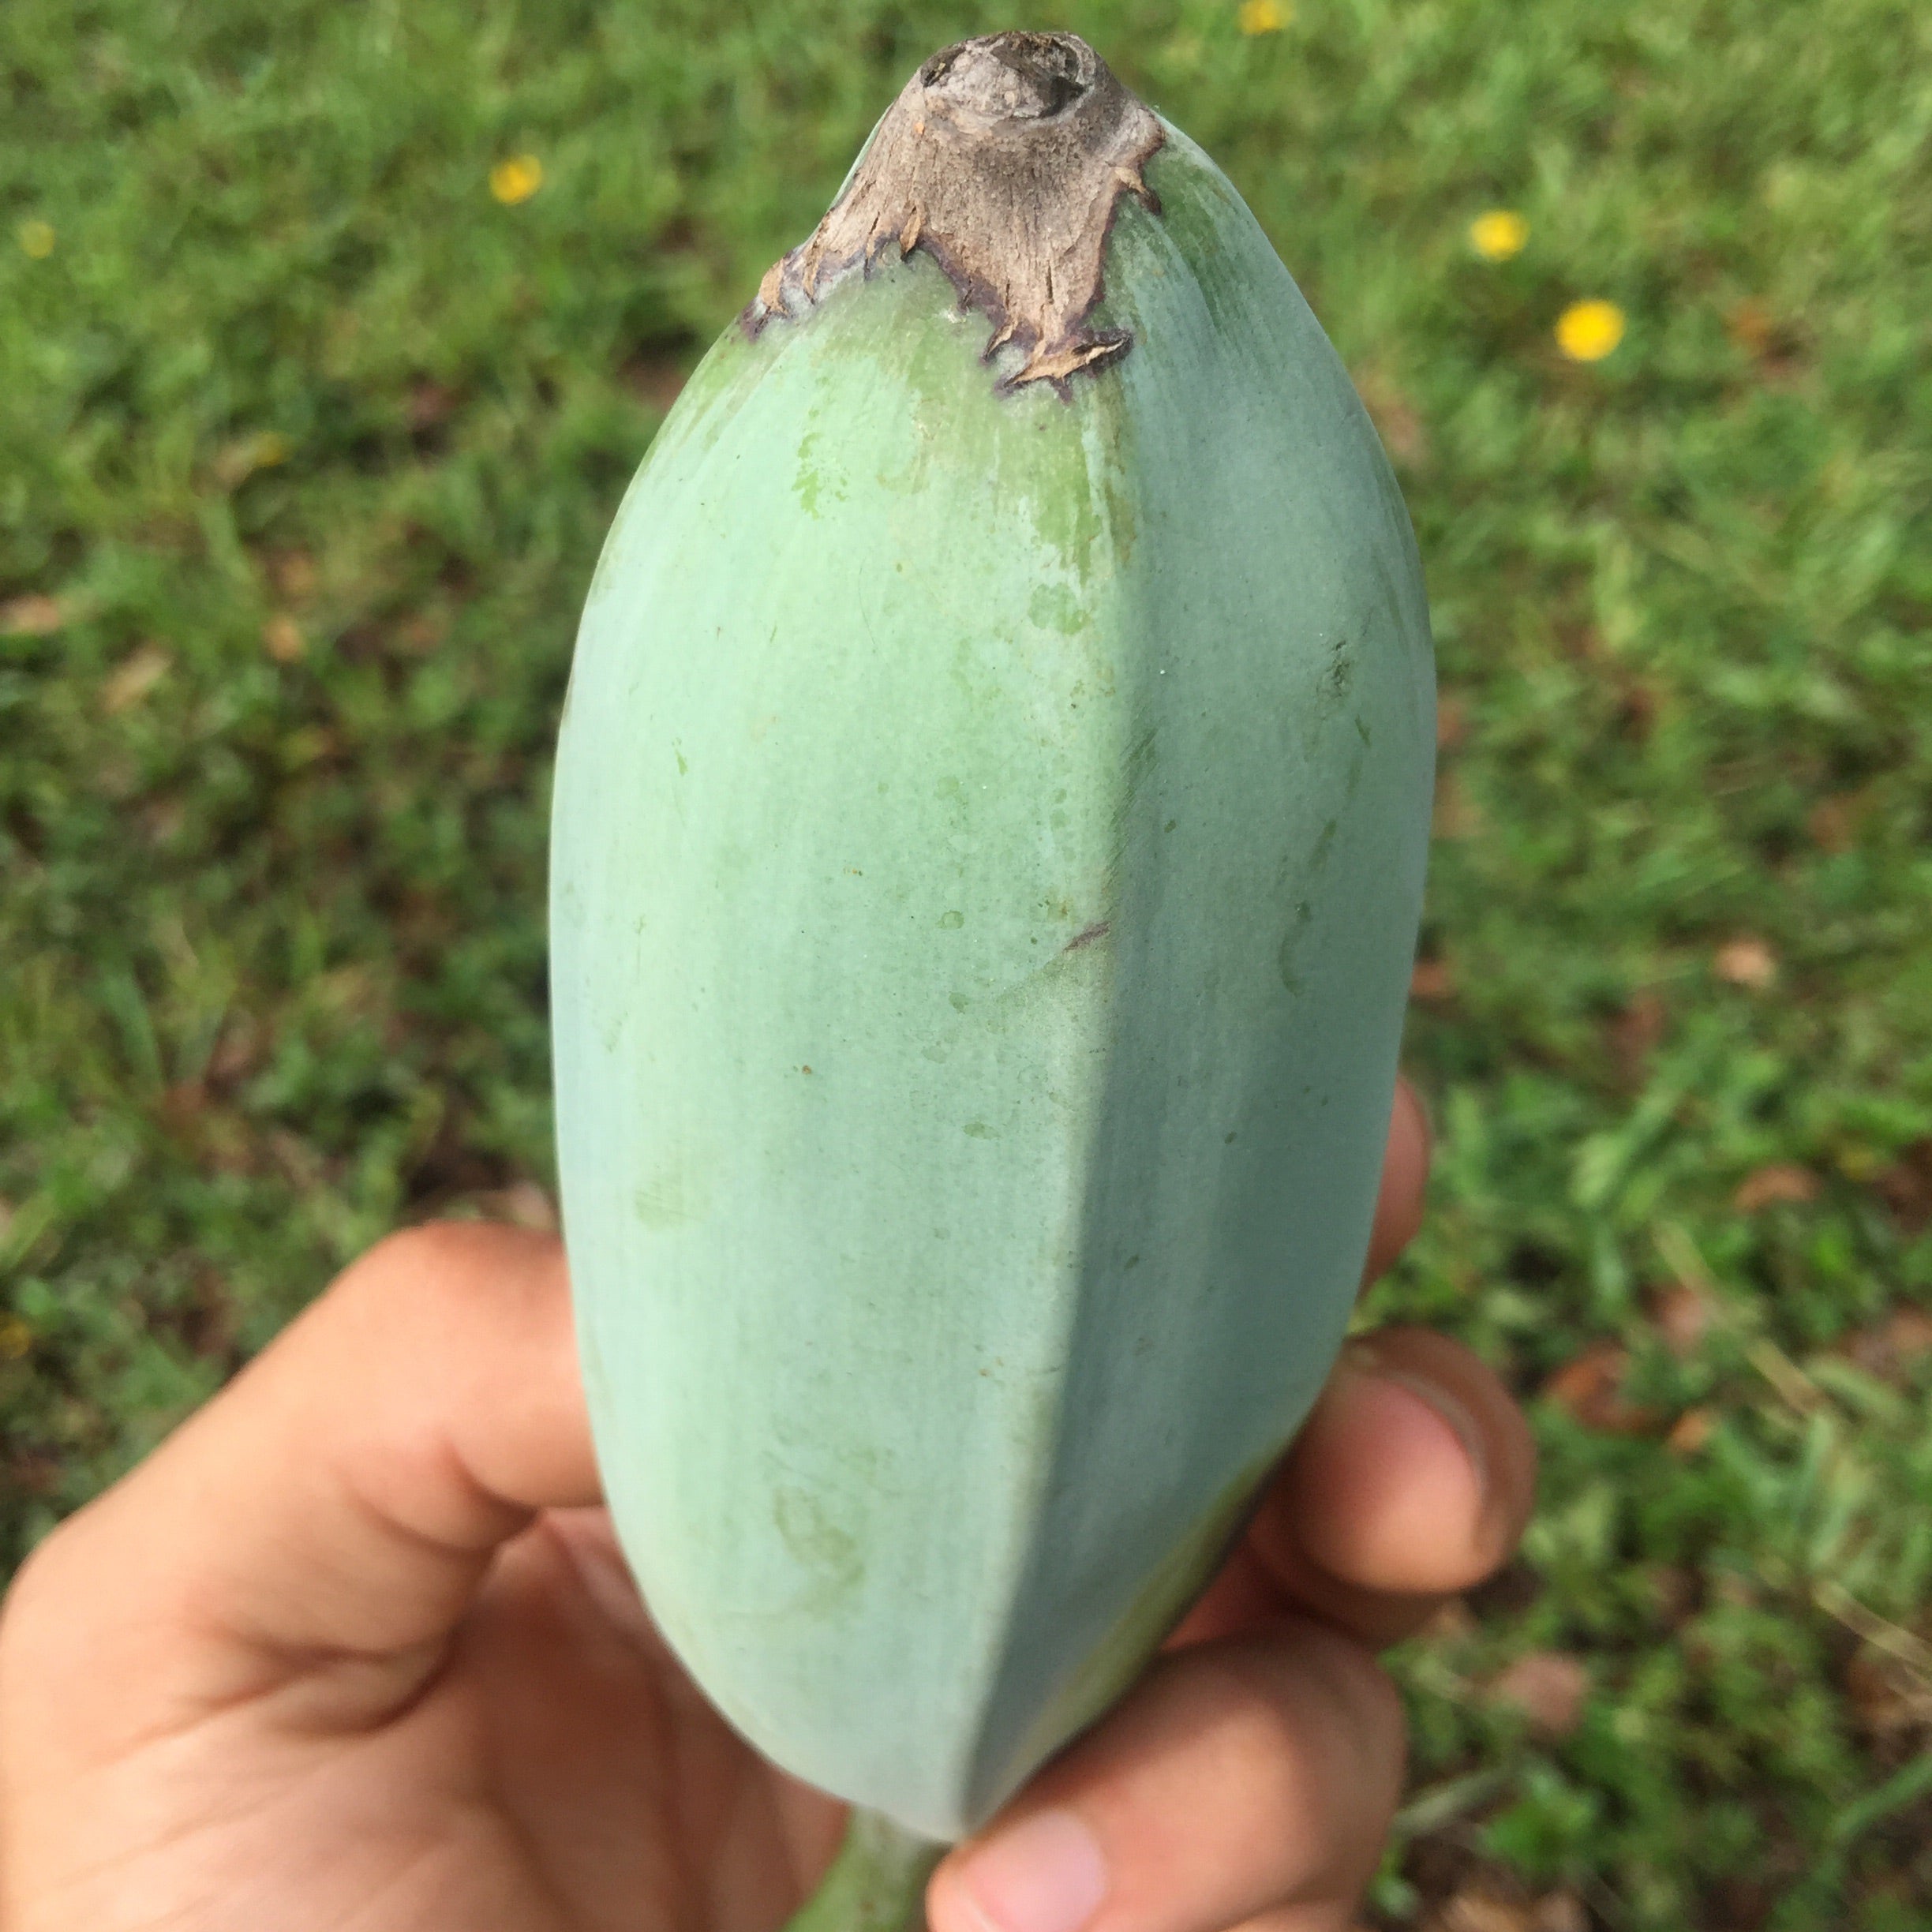 blue java banana